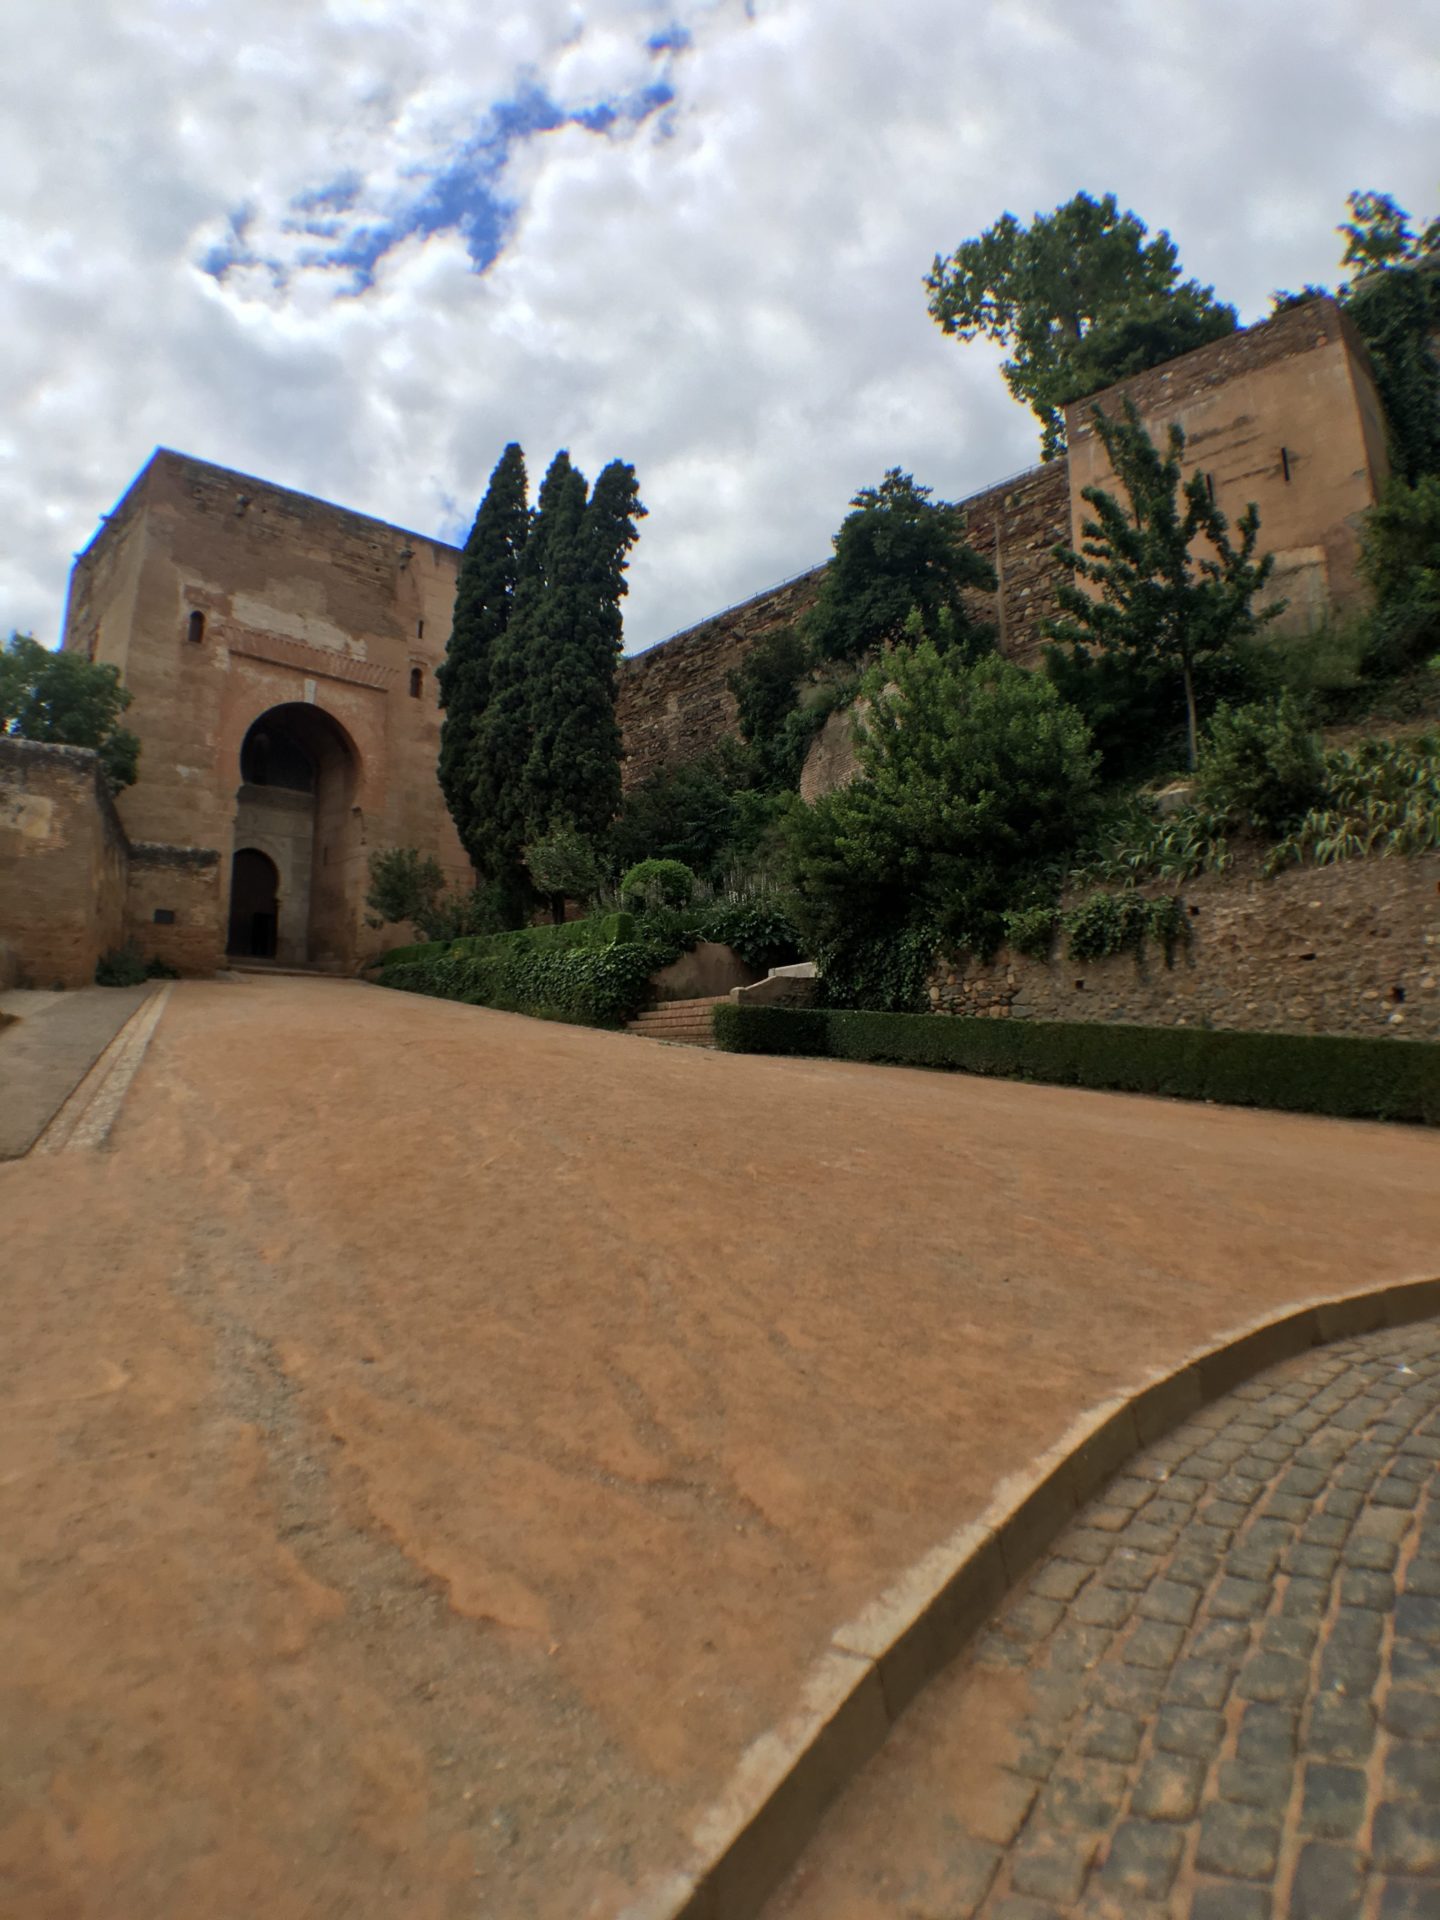 Must See: The Alhambra in Granada, Spain